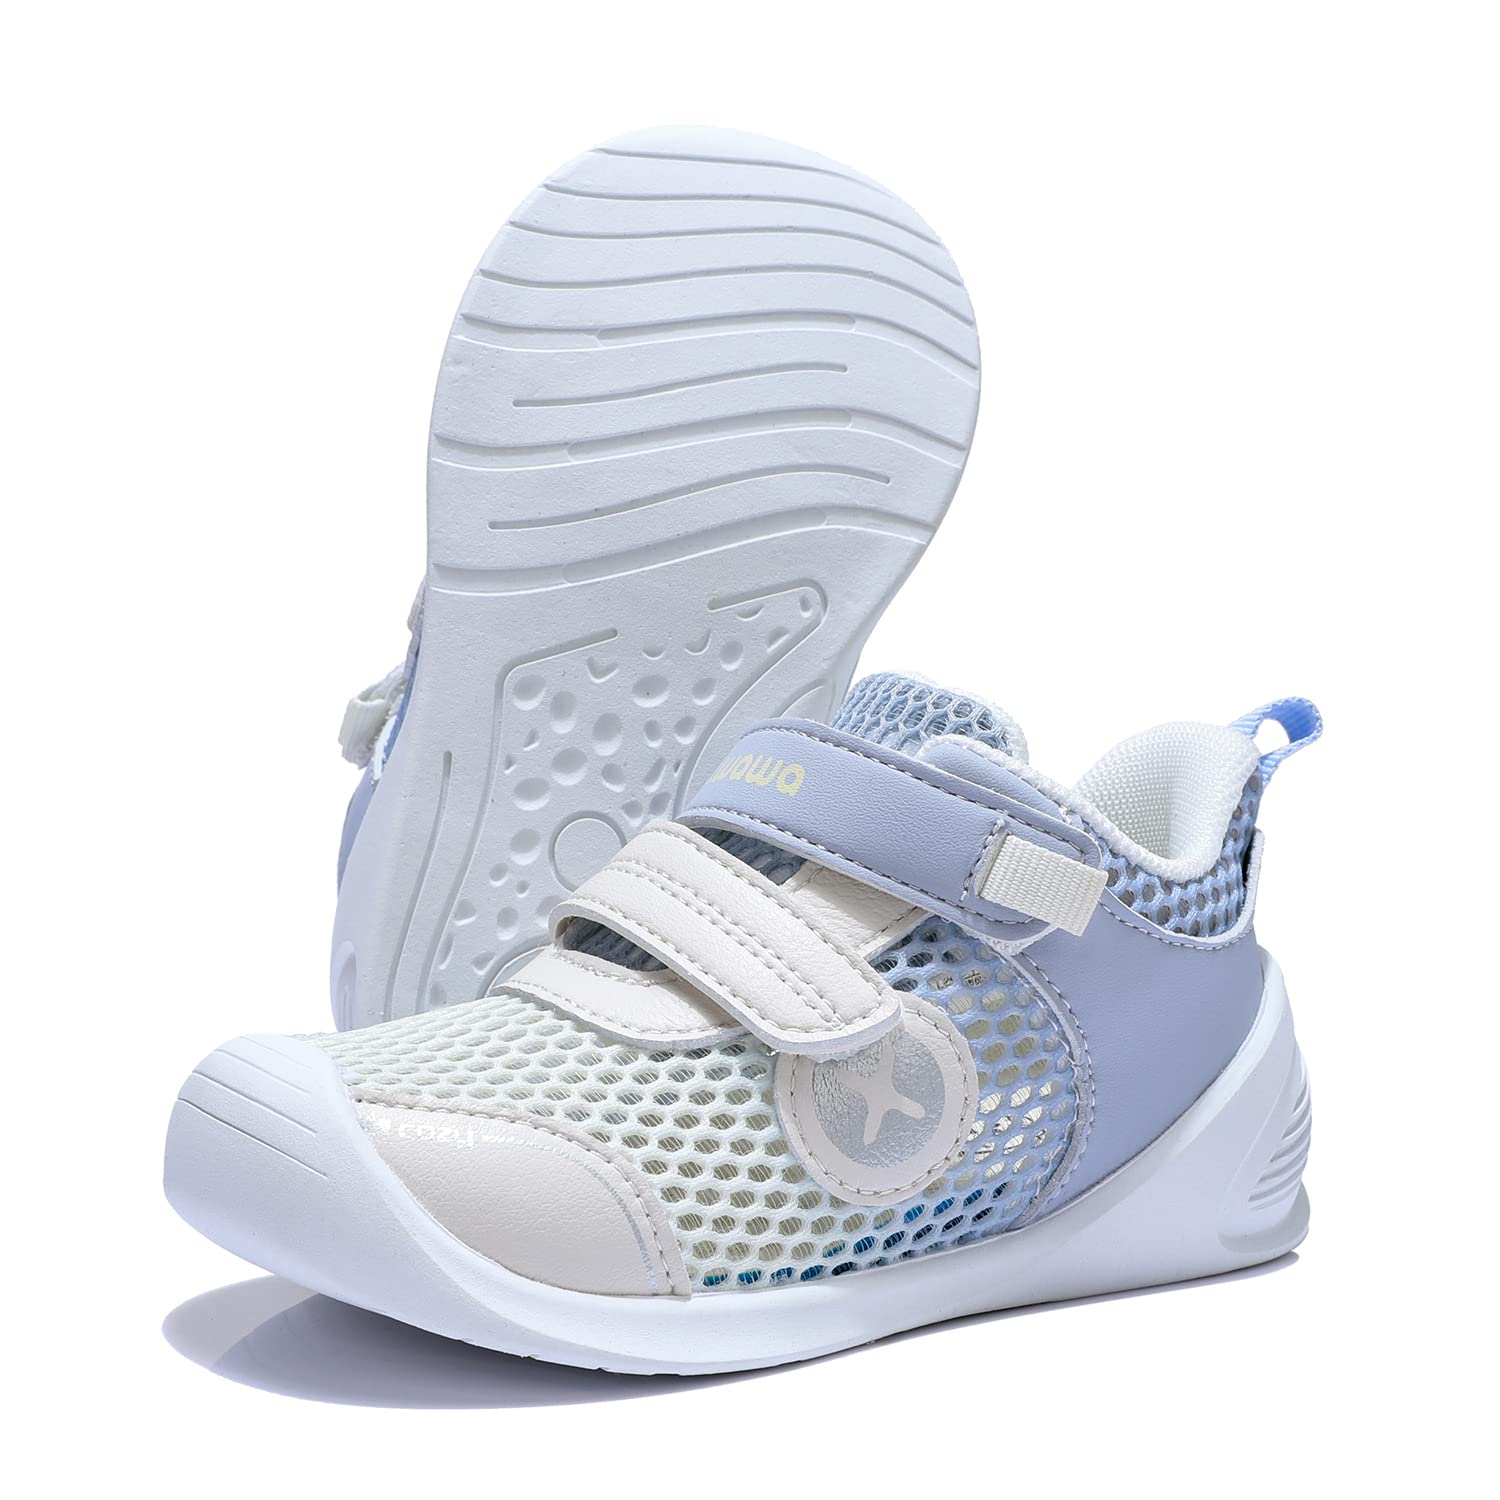 x.wawa Baby Boys Girls Infant Shoes Sneakers Functional Walking Toddler Lightweight